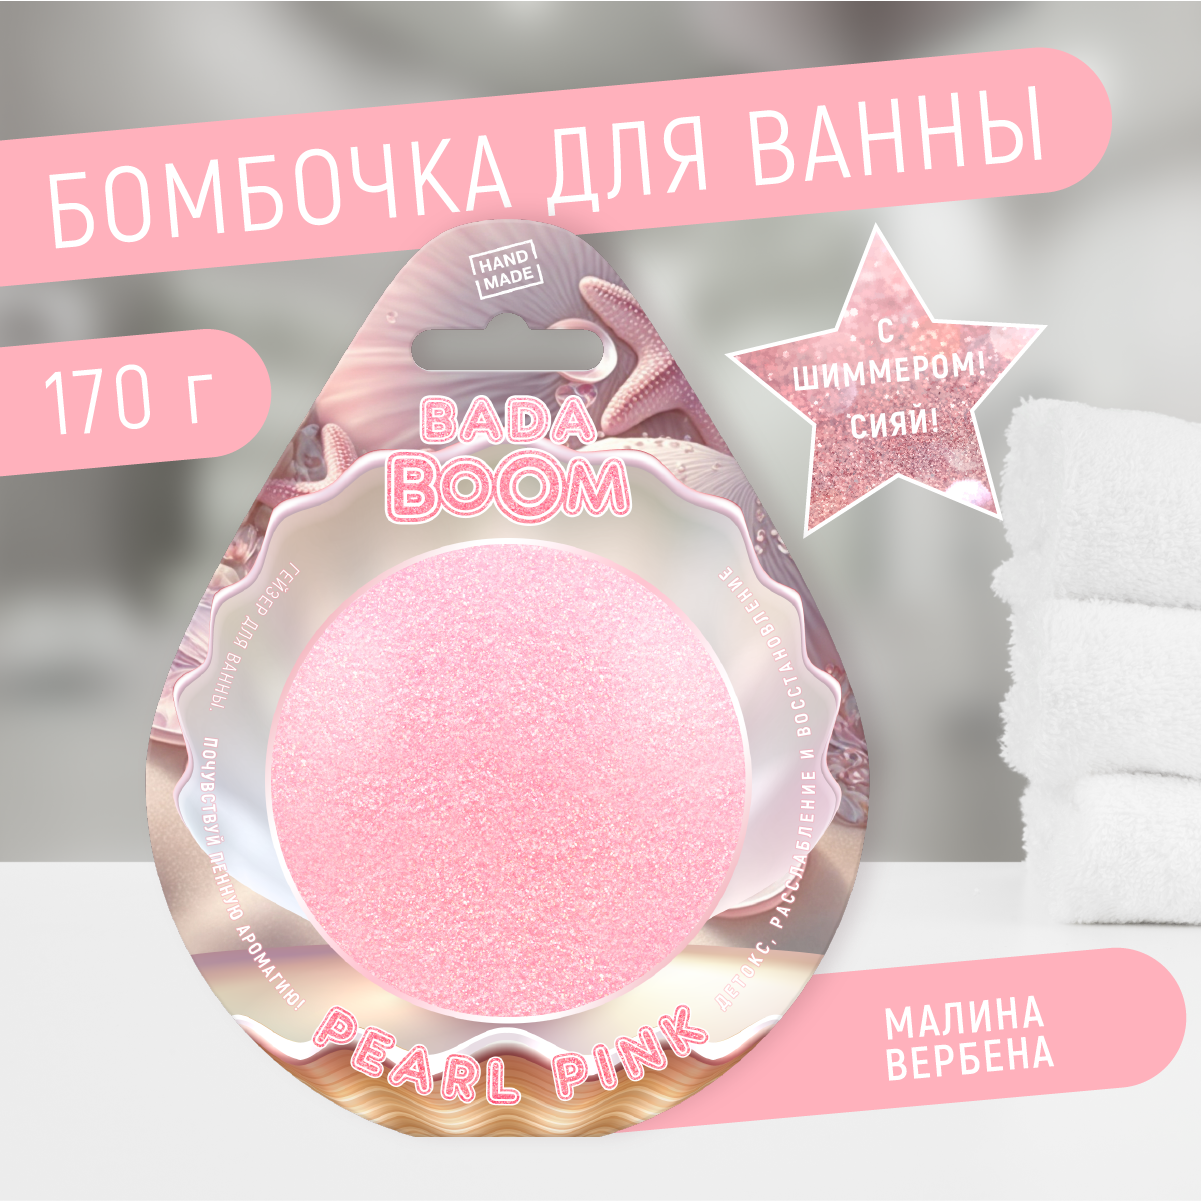 Бомбочка для ванны эко гейзер с шиммером Pearl малина и вербена 170 г бомбочка для ванны finn lux ягода малина розовый